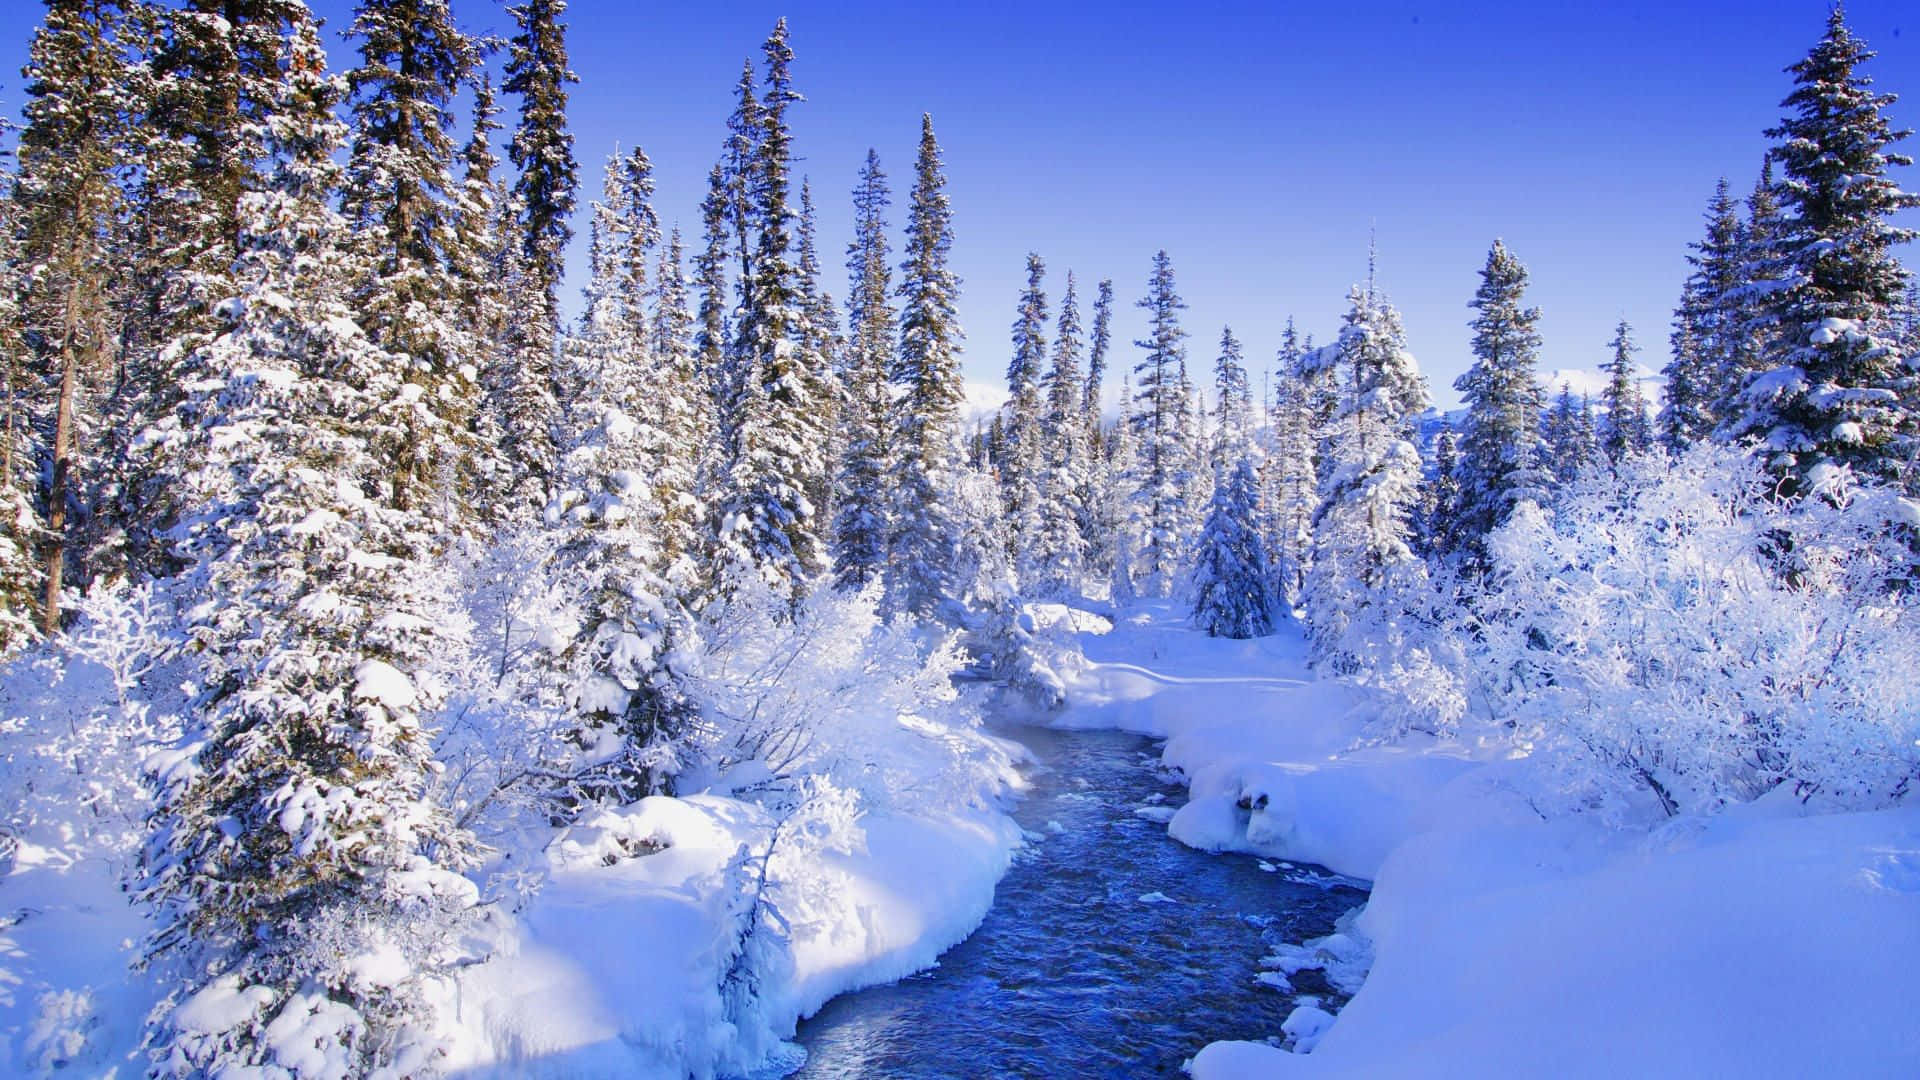 Winter Wonderland Scenery Wallpaper